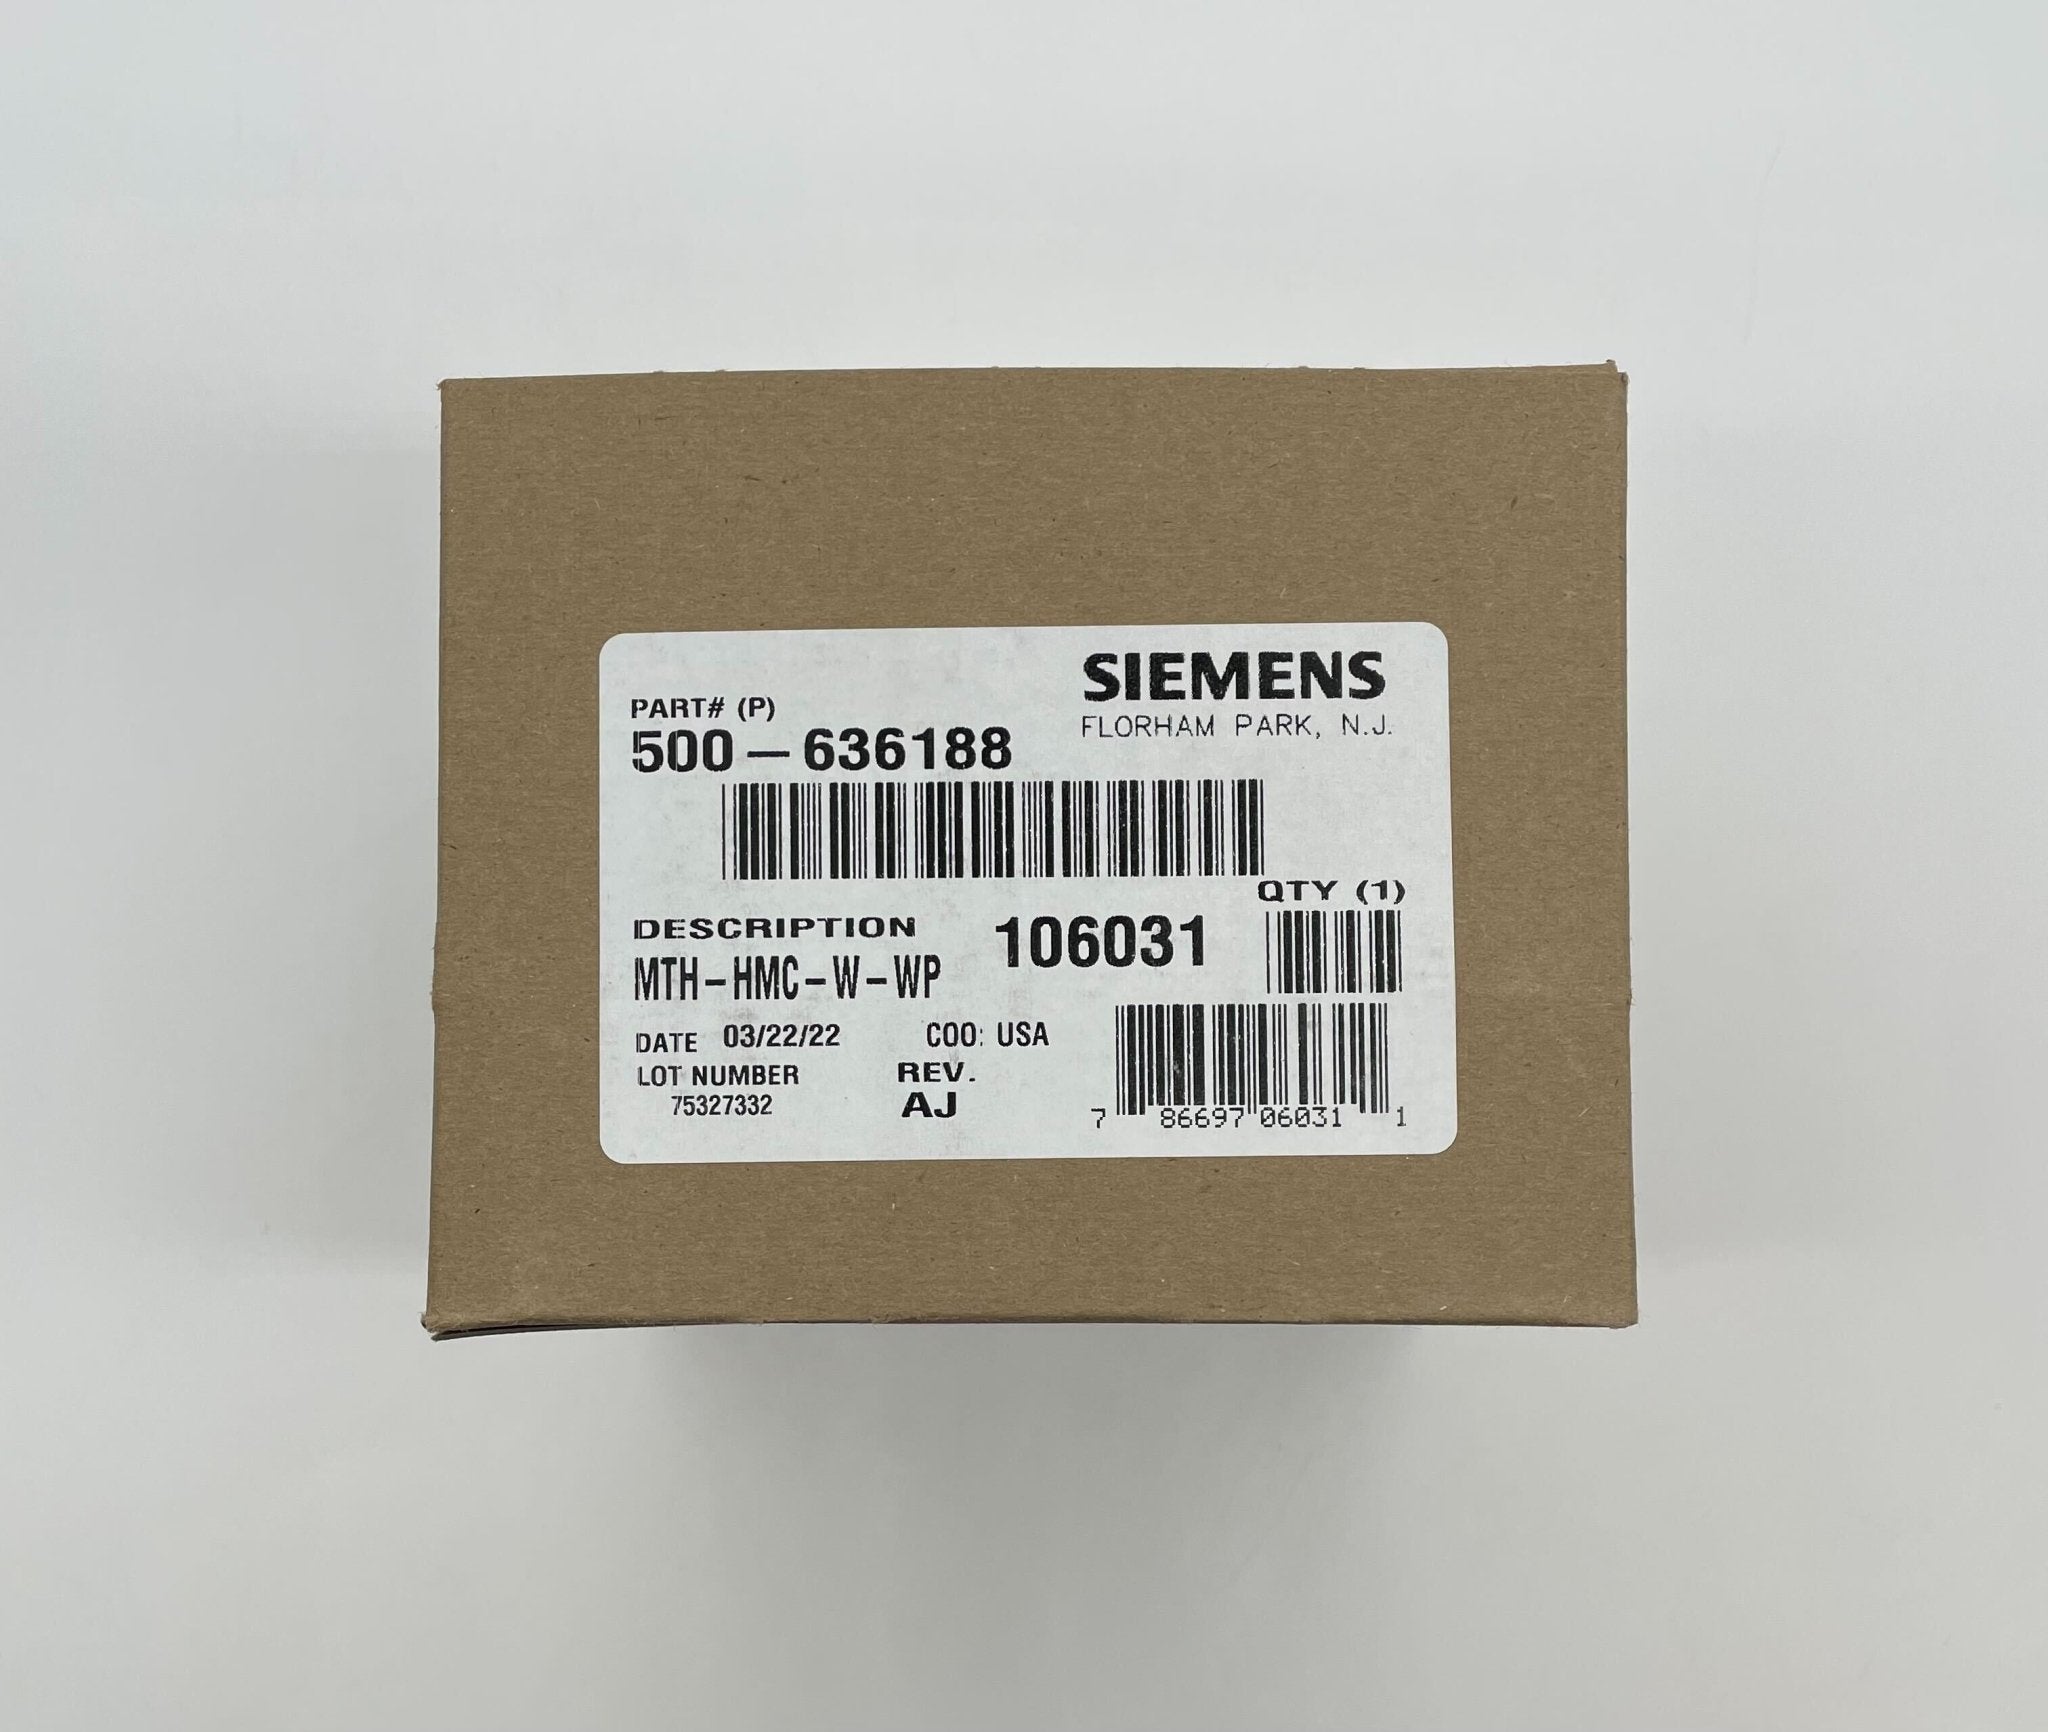 Siemens MTH-HMC-W-WP - The Fire Alarm Supplier